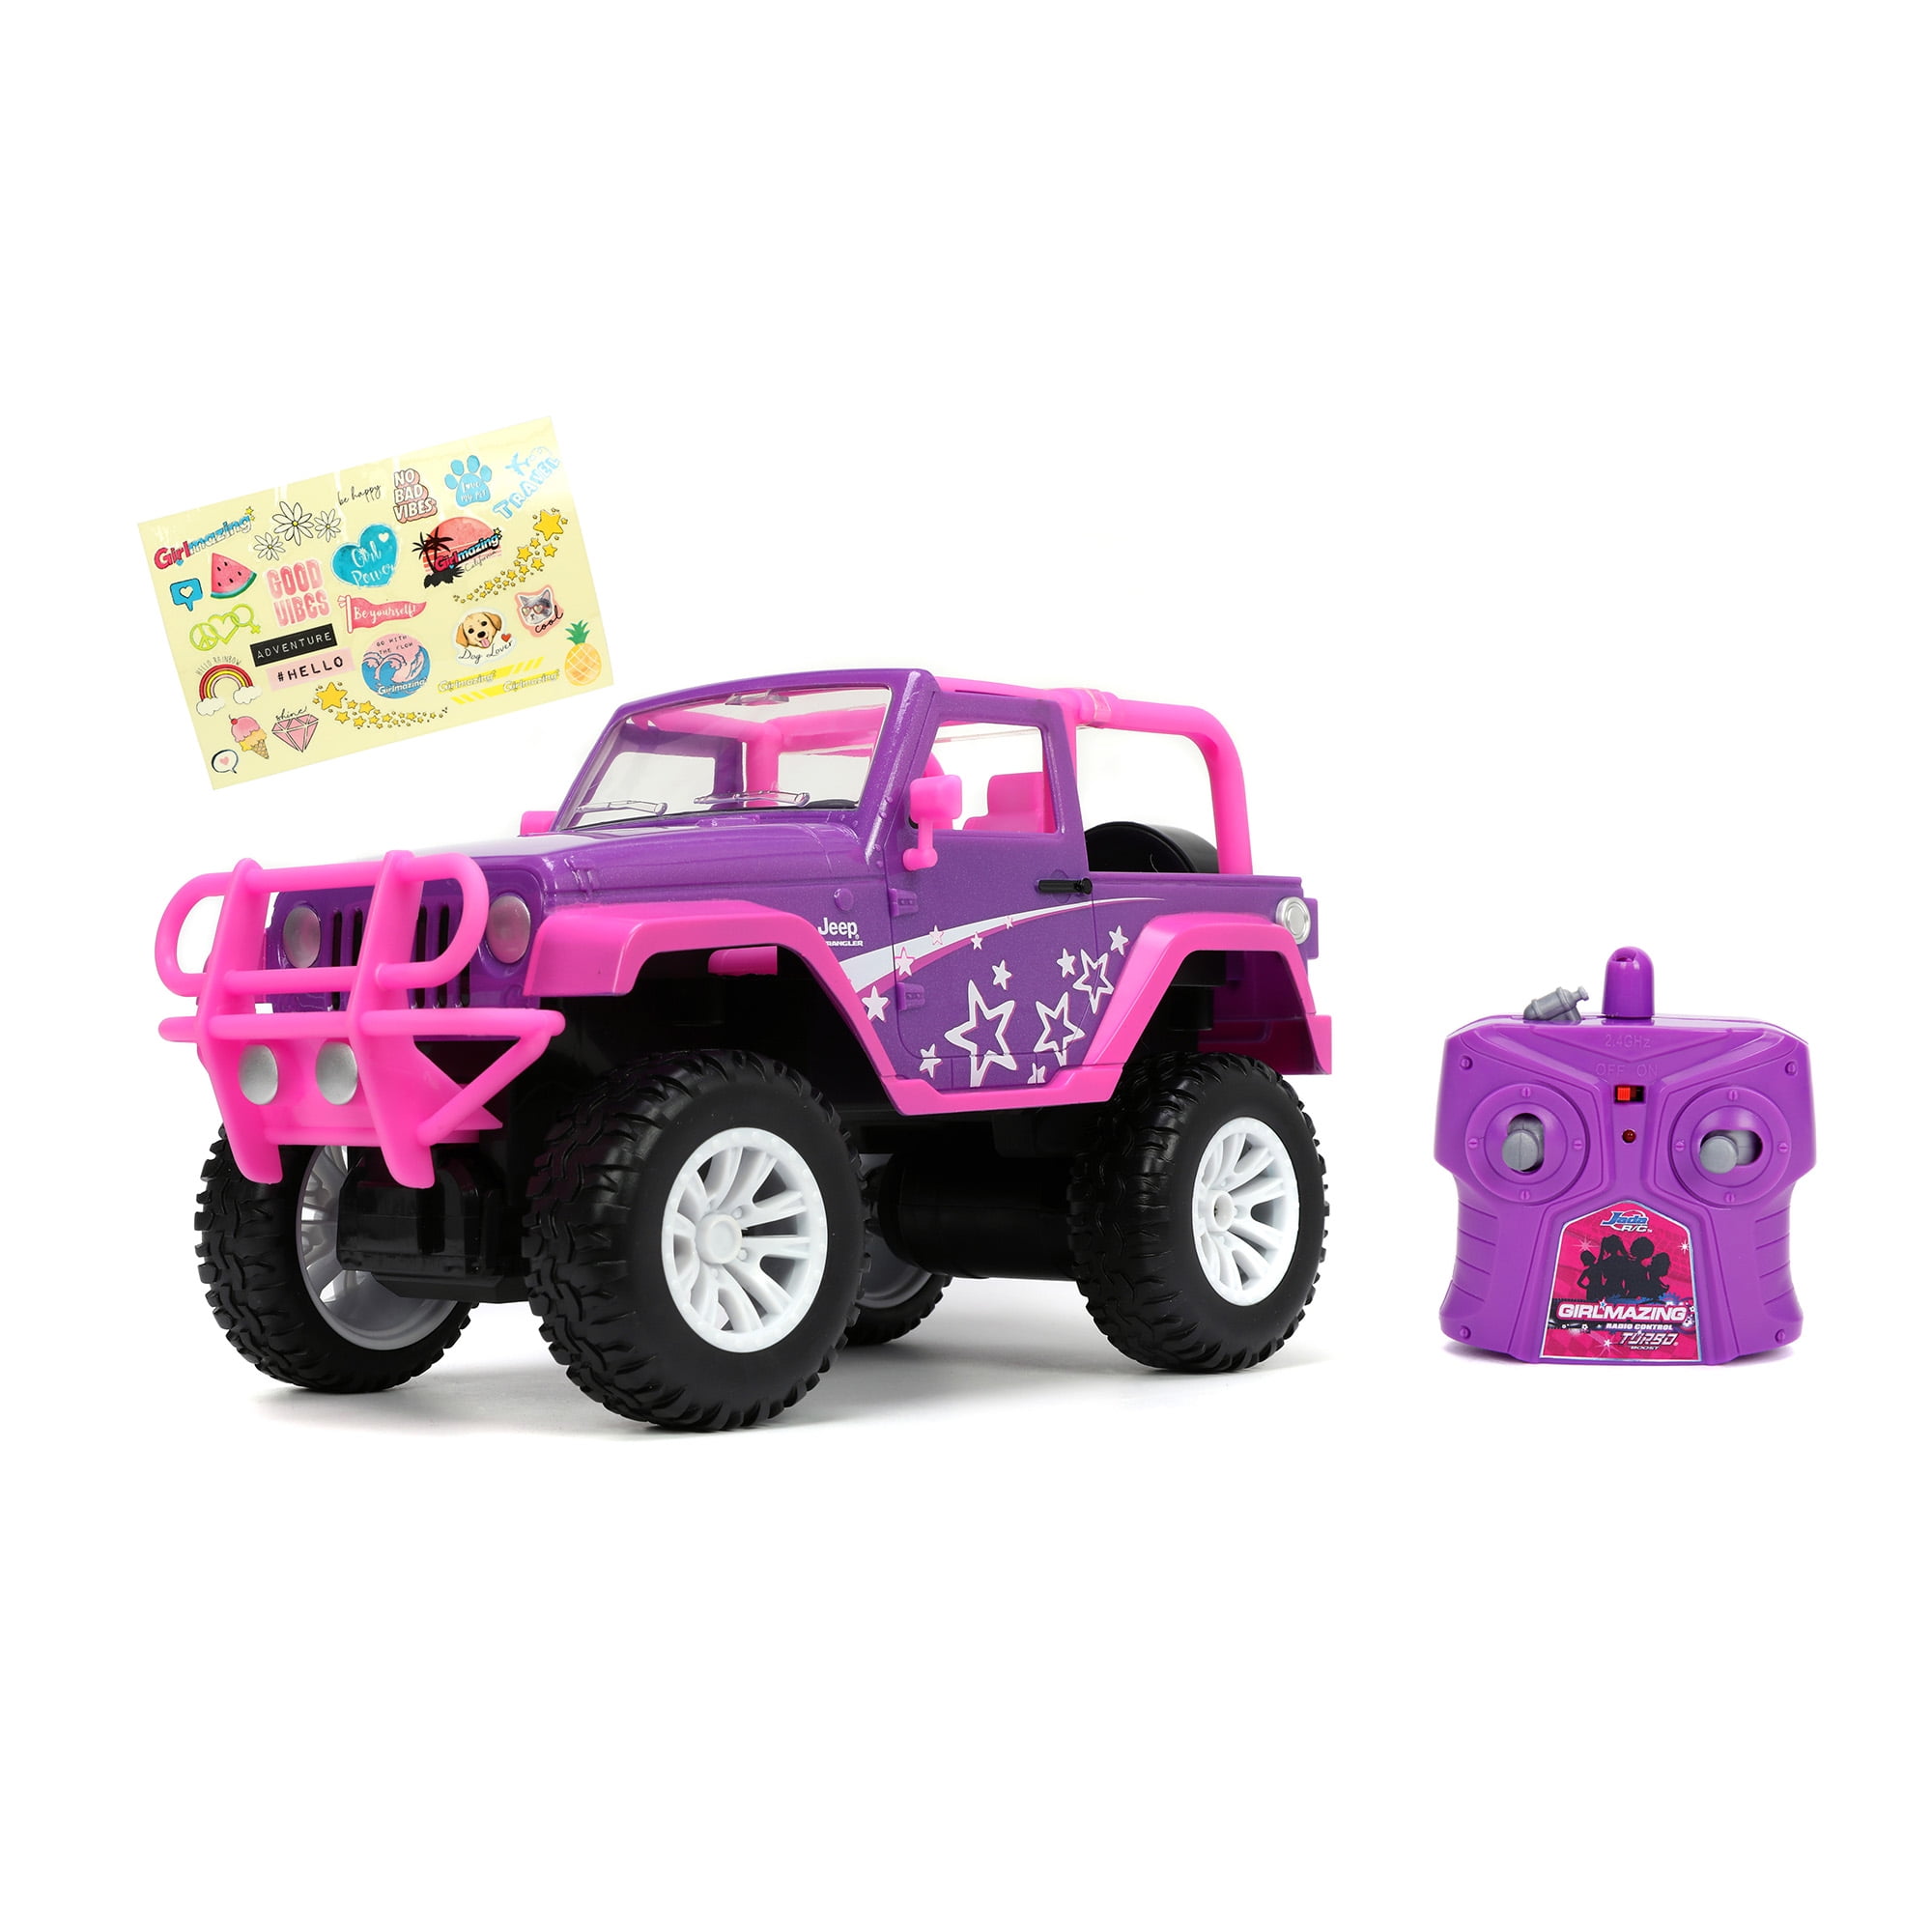 Girlmazing 1:16 Jeep Wrangler RC Remote Control Car Purple (WM Exclusive) Ages 6+